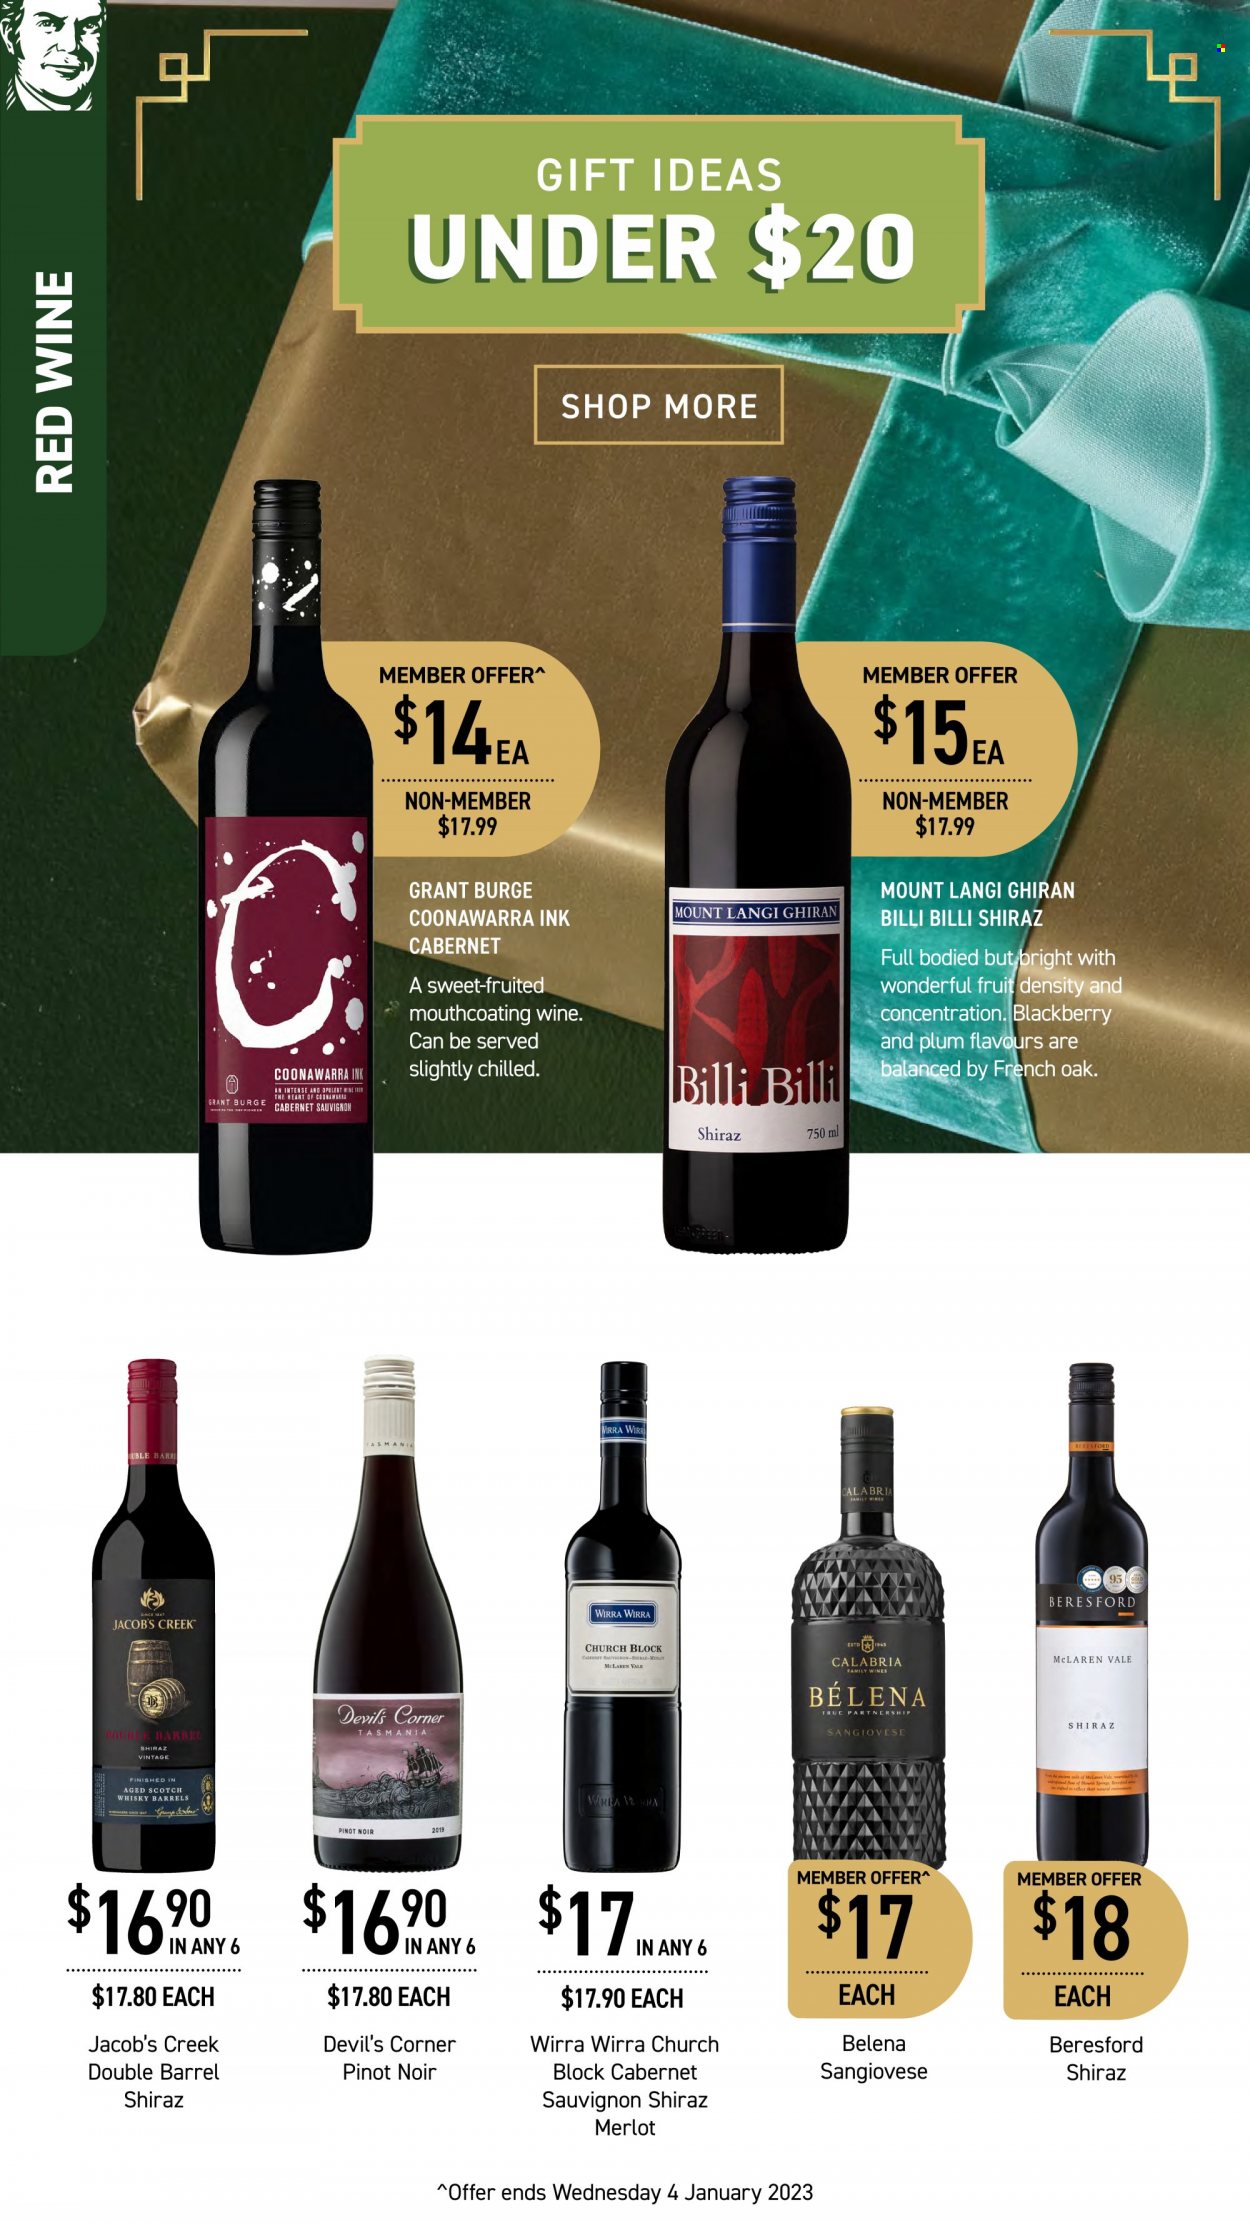 thumbnail - Dan Murphy's Catalogue - 1 Dec 2022 - 14 Dec 2022 - Sales products - Cabernet Sauvignon, red wine, wine, Merlot, Pinot Noir, Jacob's Creek, Shiraz, scotch whisky, whisky. Page 19.